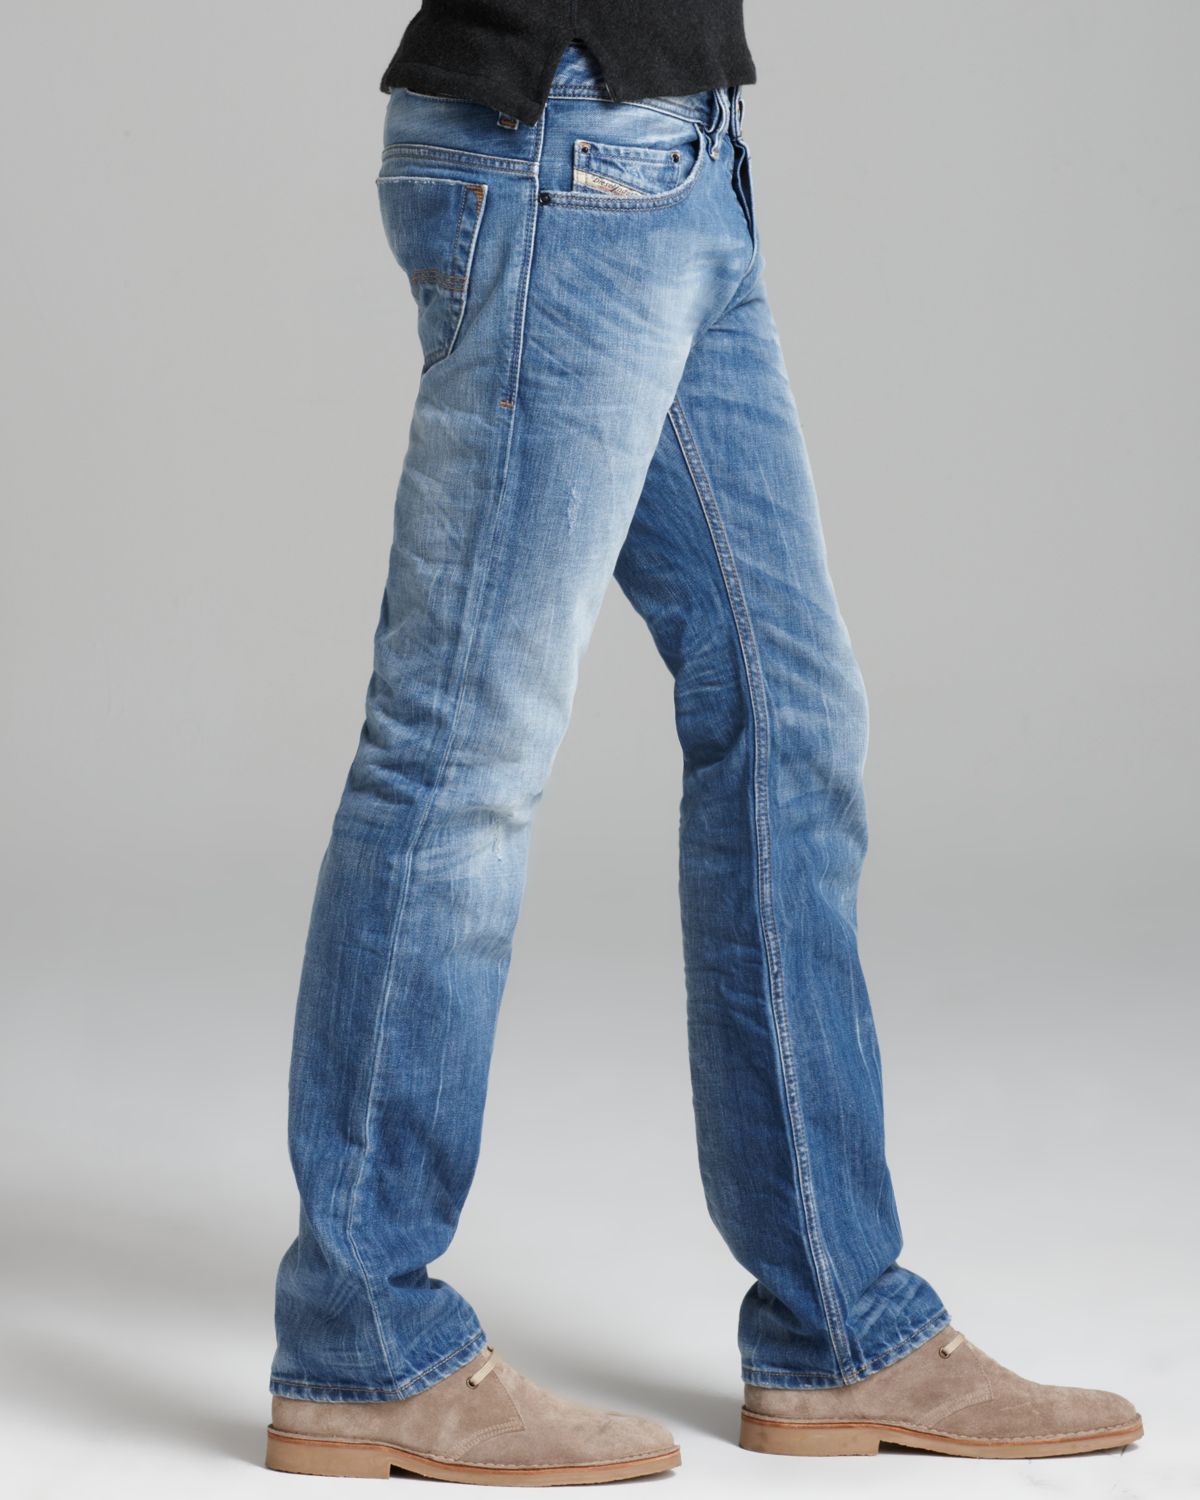 Lyst - Diesel Jeans - Safado Straight Fit In Sky in Blue for Men